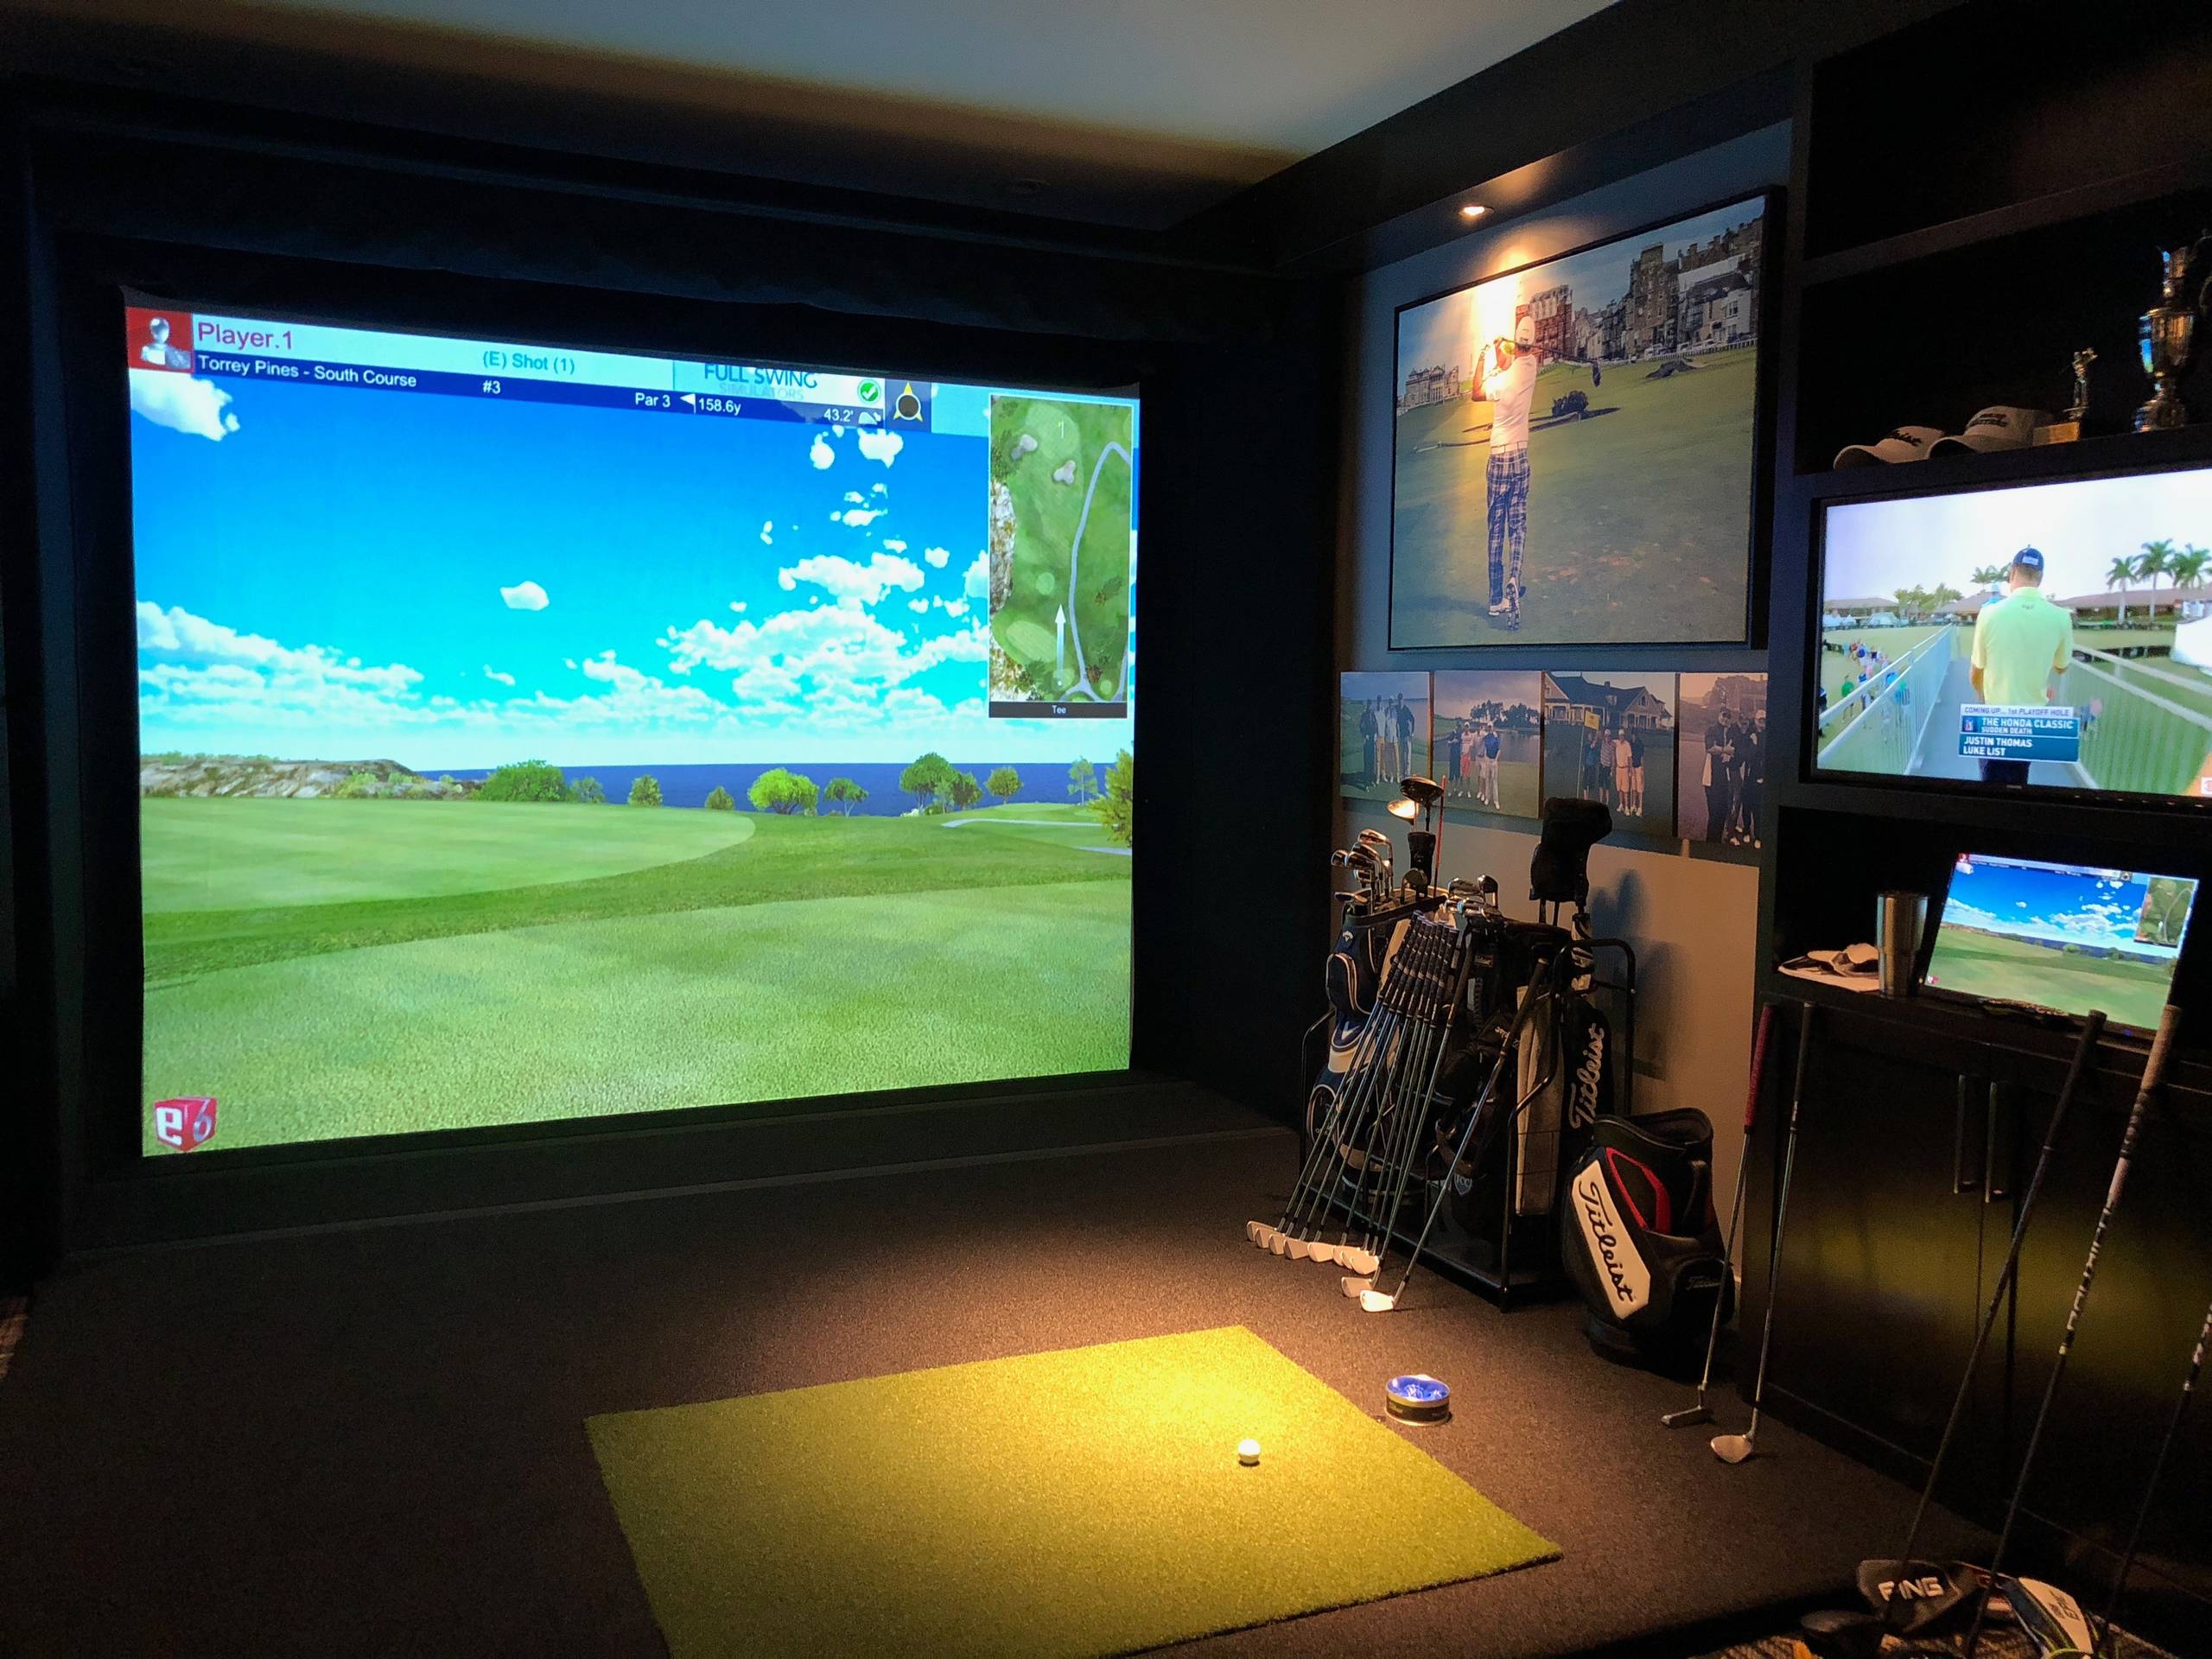 Golf simulation room - garage conversion